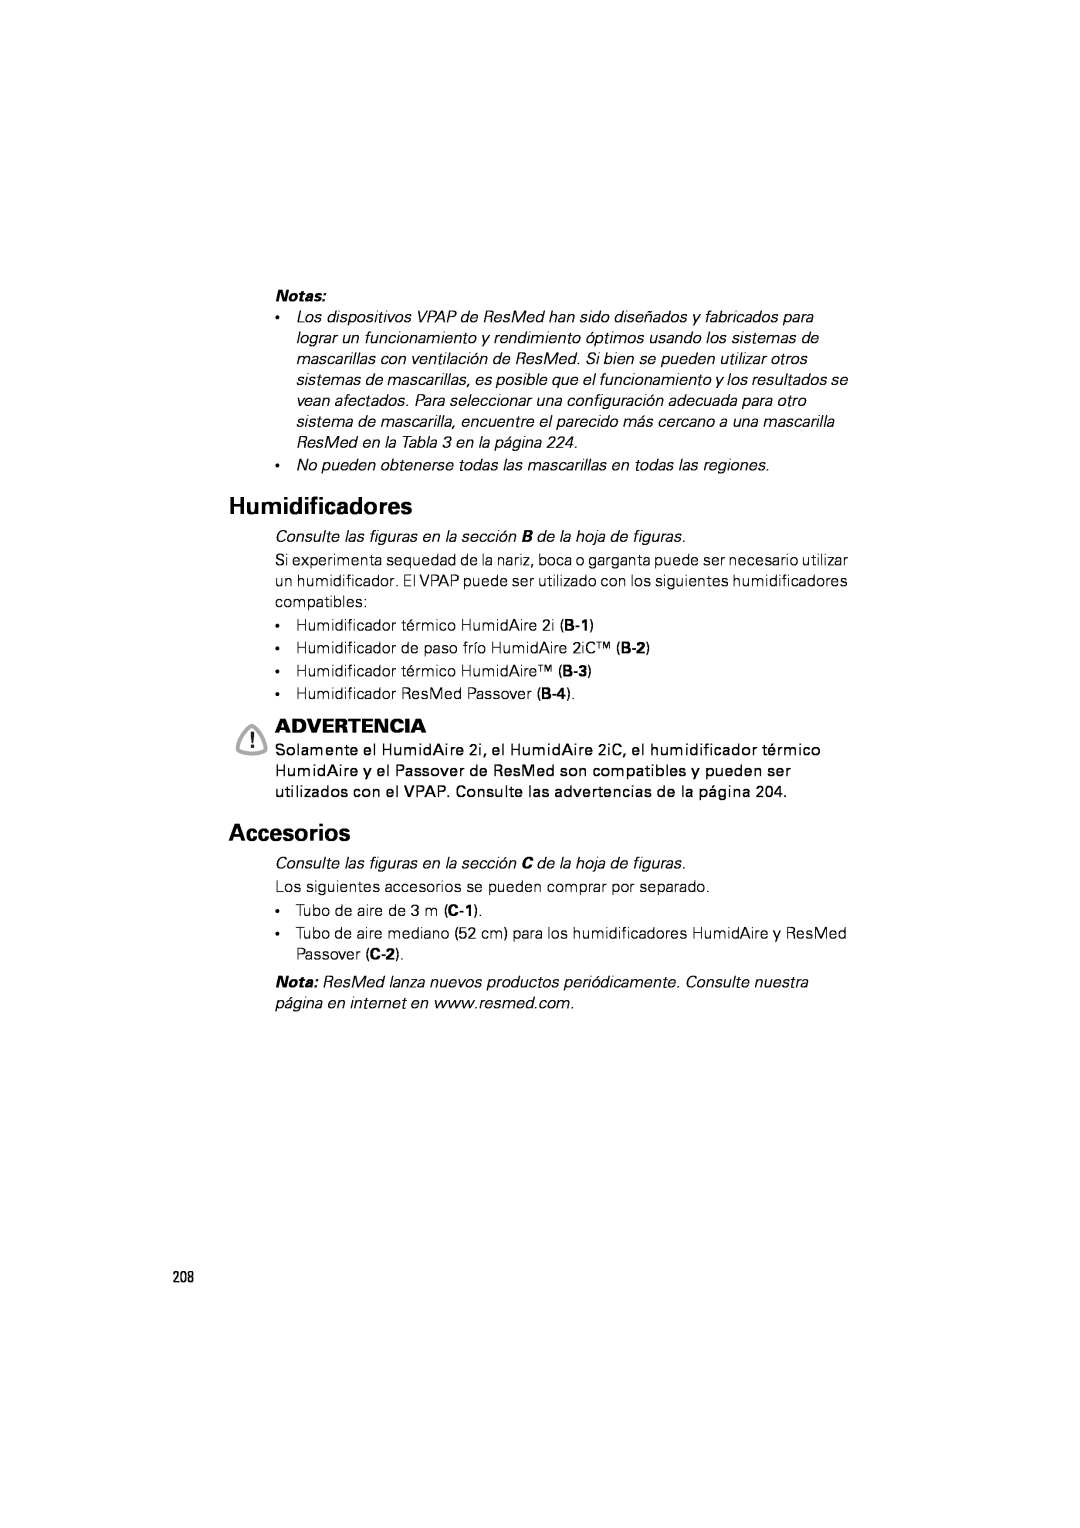 ResMed III & III ST user manual Humidificadores, Accesorios, Advertencia, Notas 